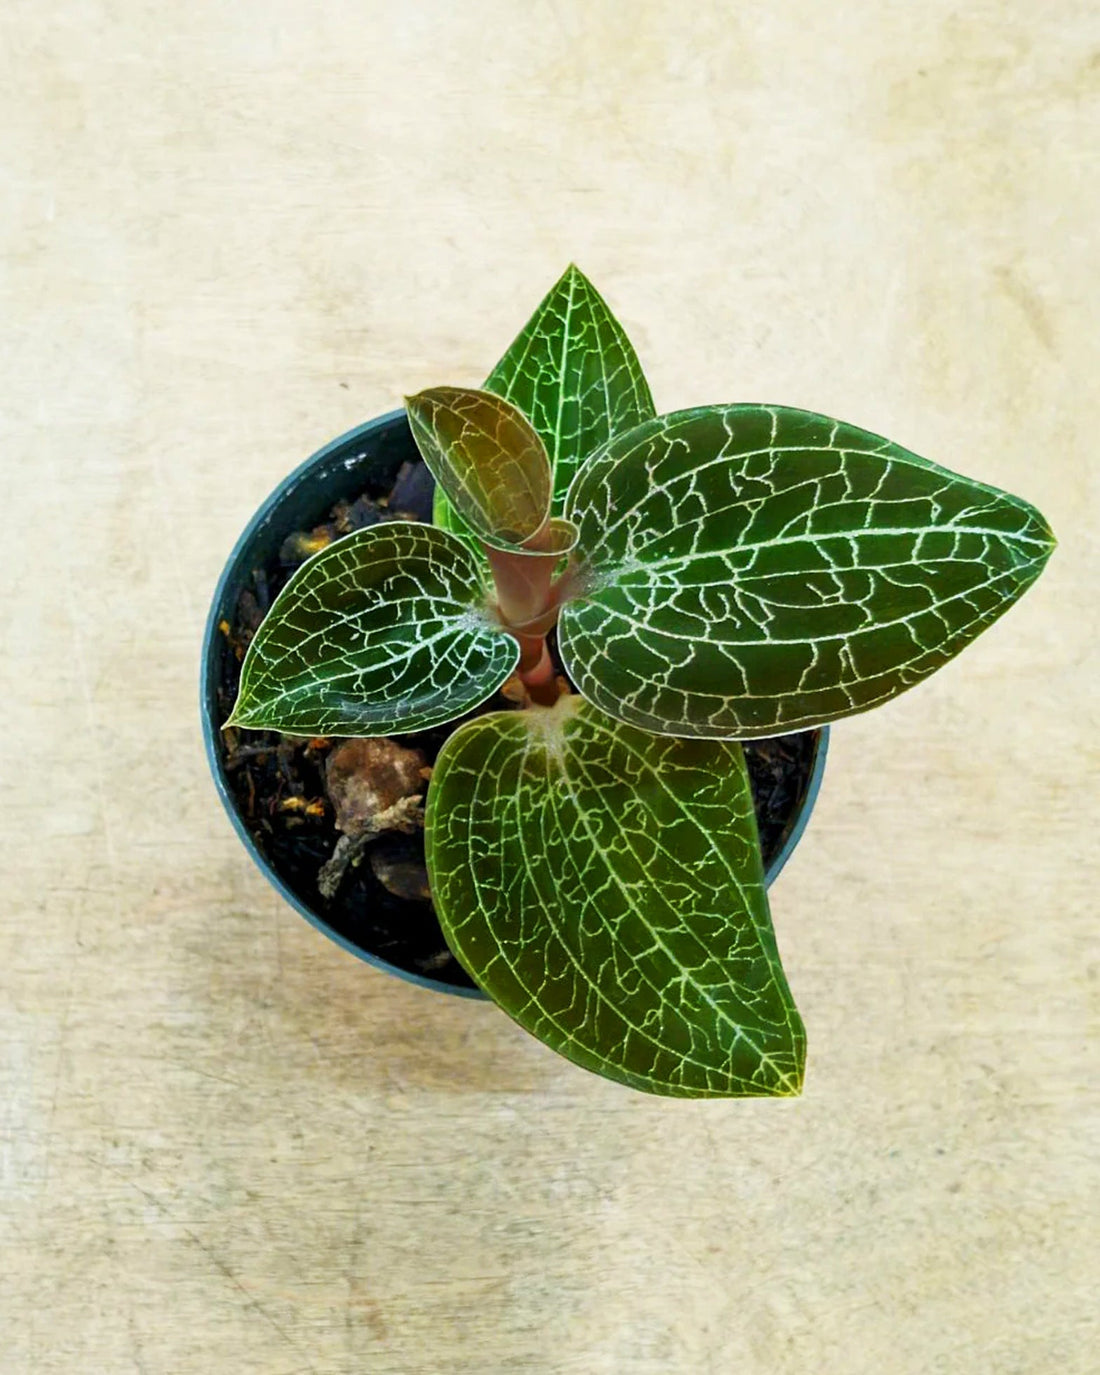 Jewel Orchid Combo - 1 Goodyera Hemsleyana & 1 Goodyera Hispida - Perfect Plants